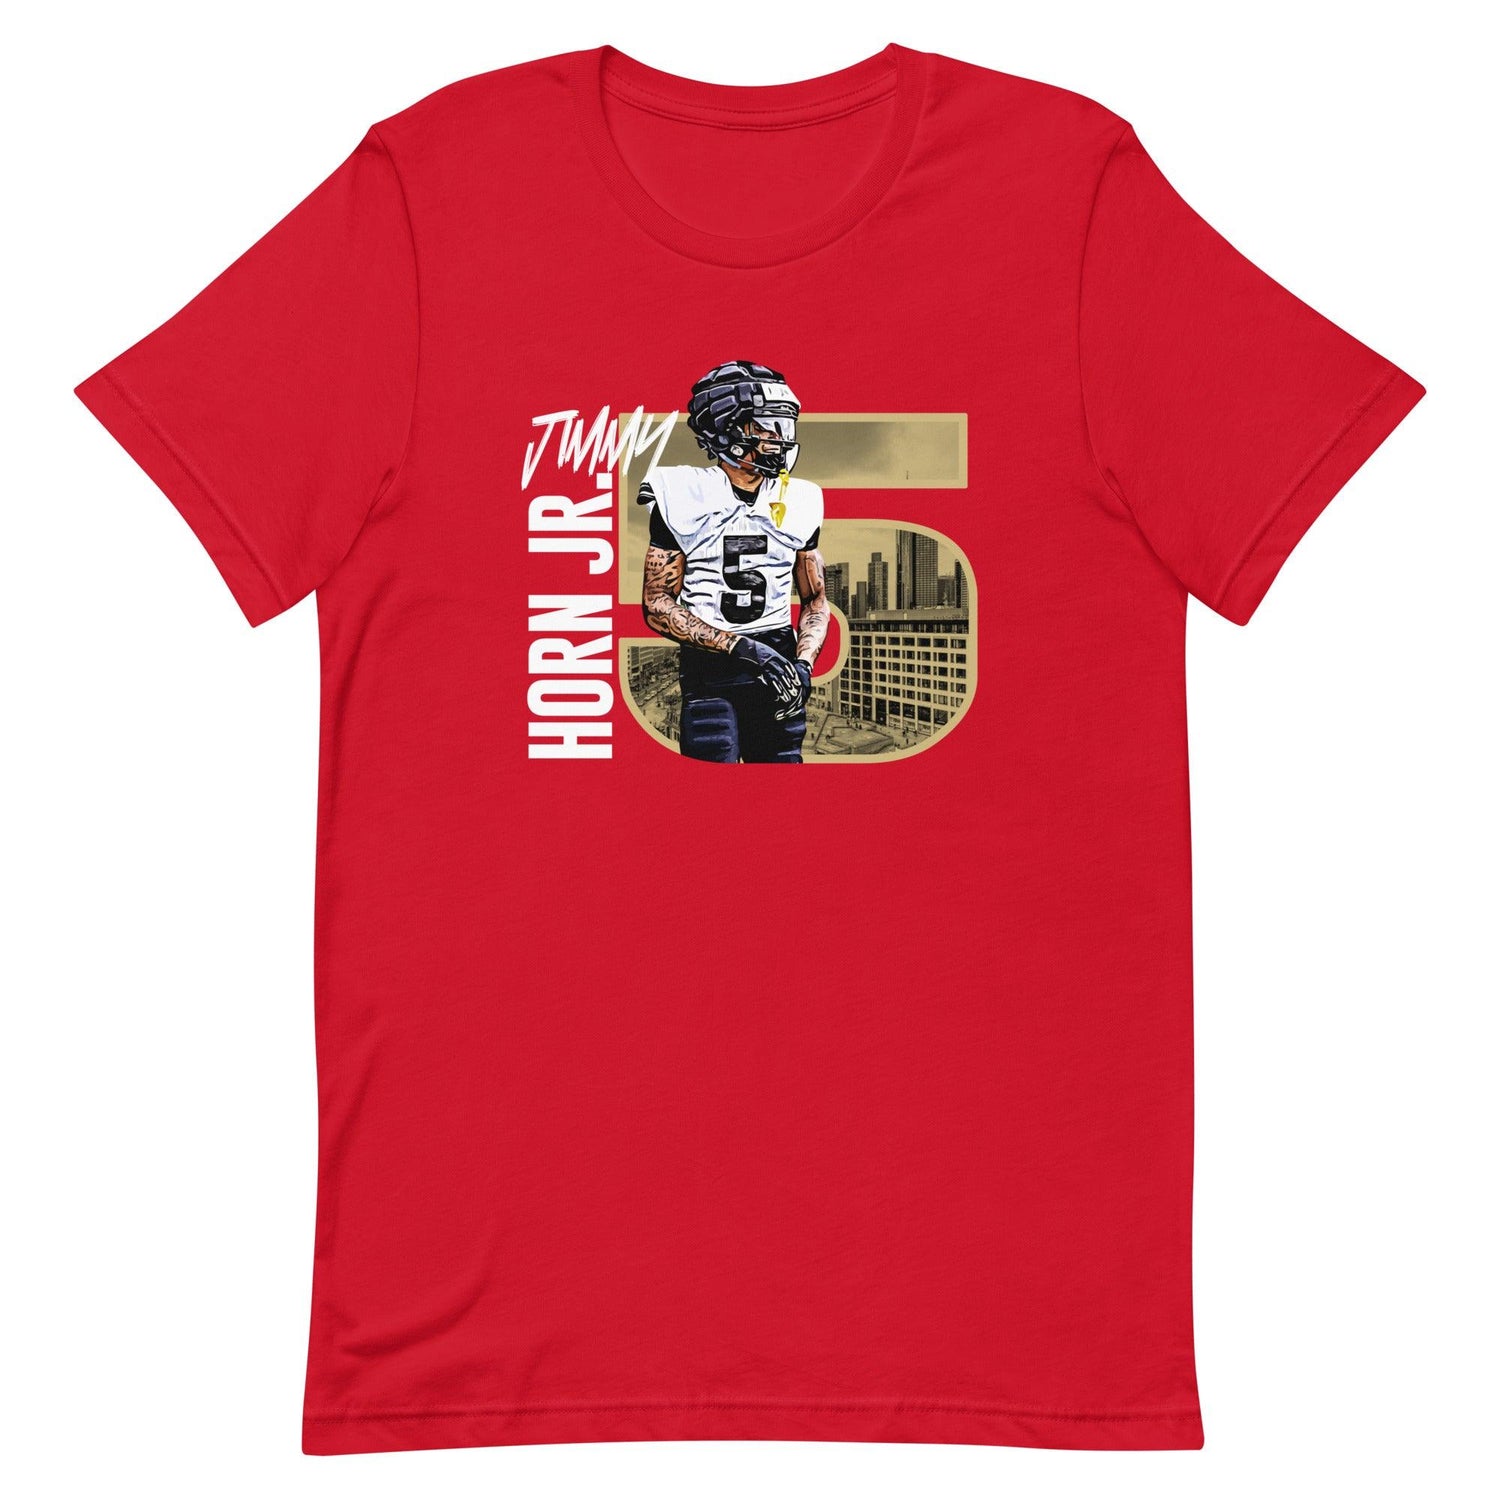 Jimmy Horn Jr. "Gameday" t-shirt - Fan Arch